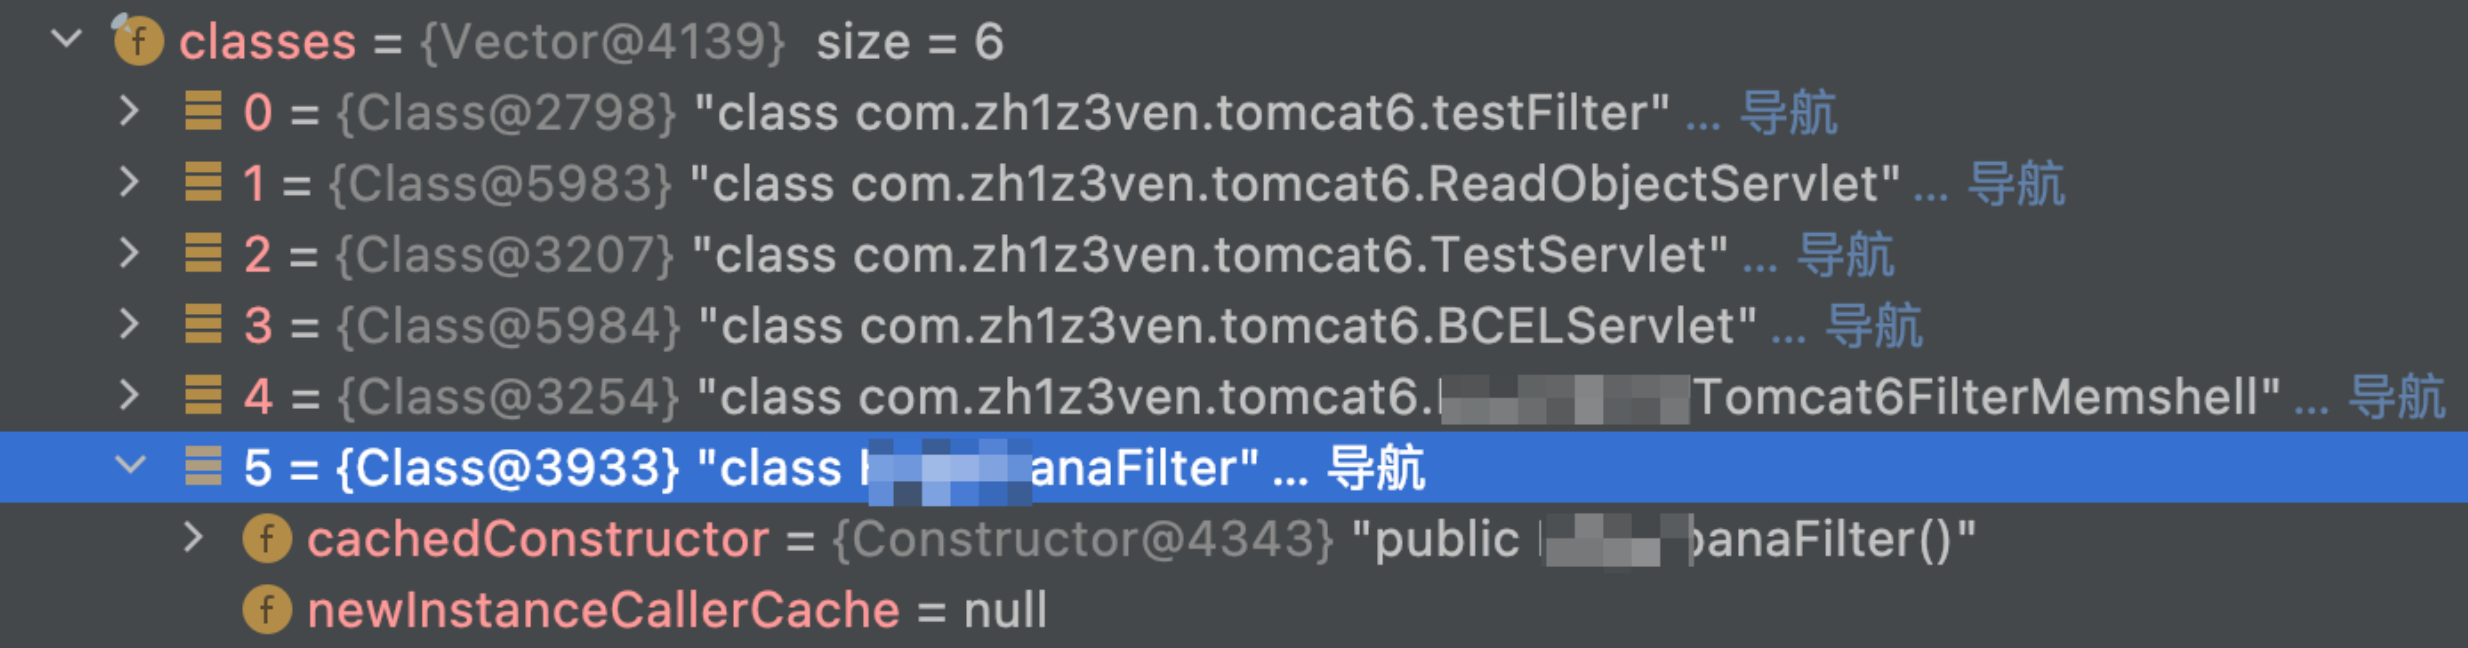 Java安全之Tomcat6 Filter内存马